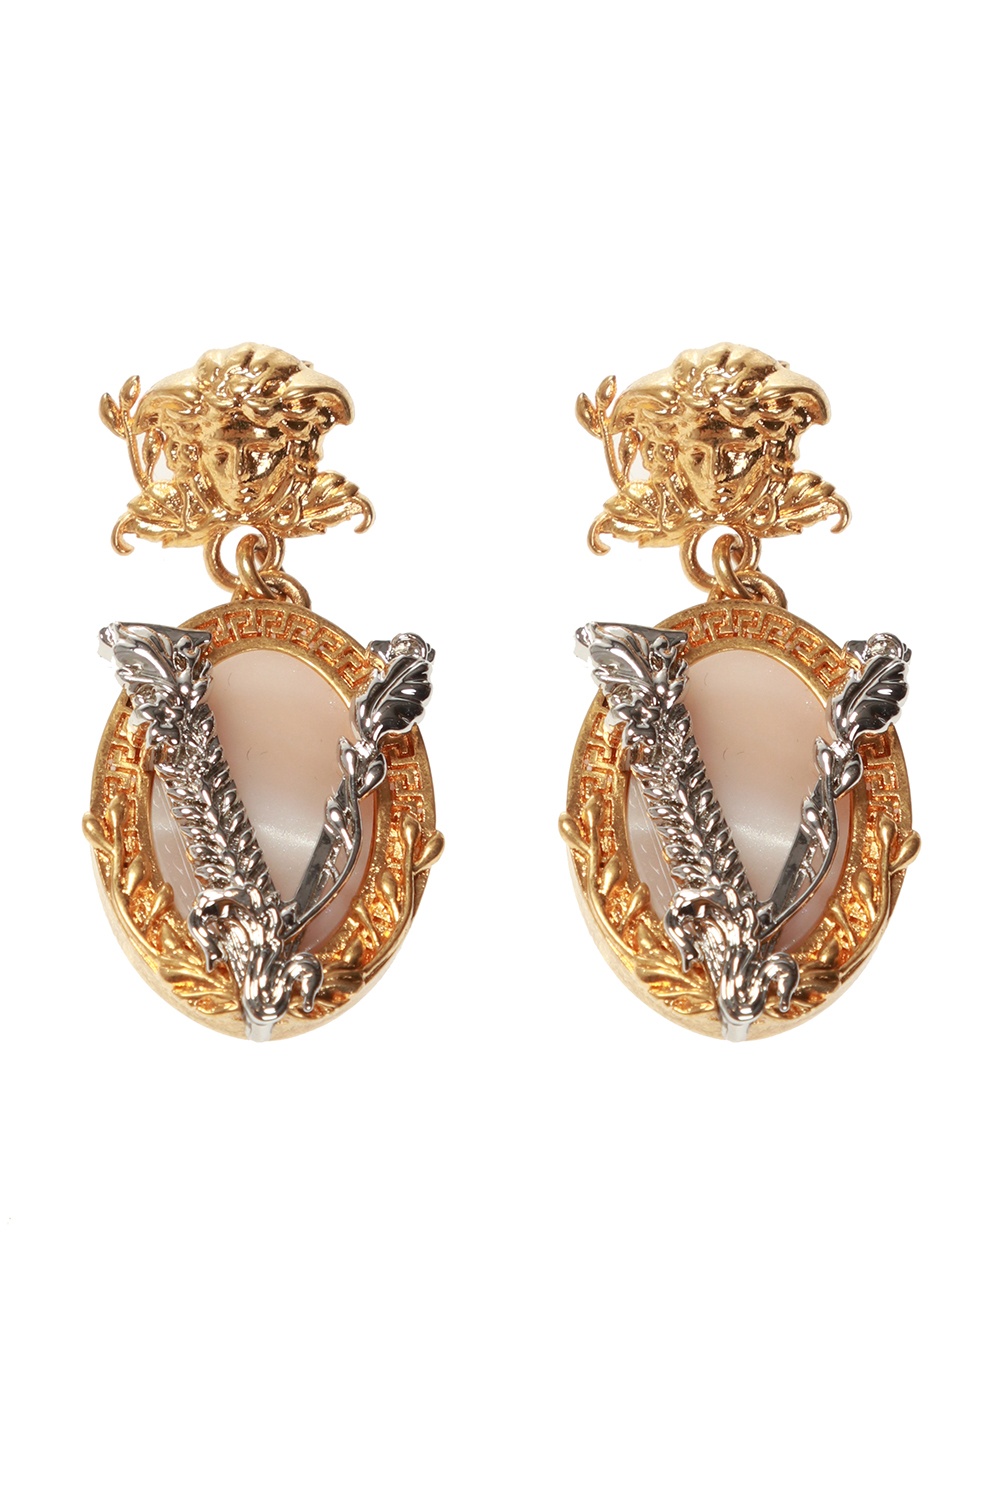 versace earrings australia